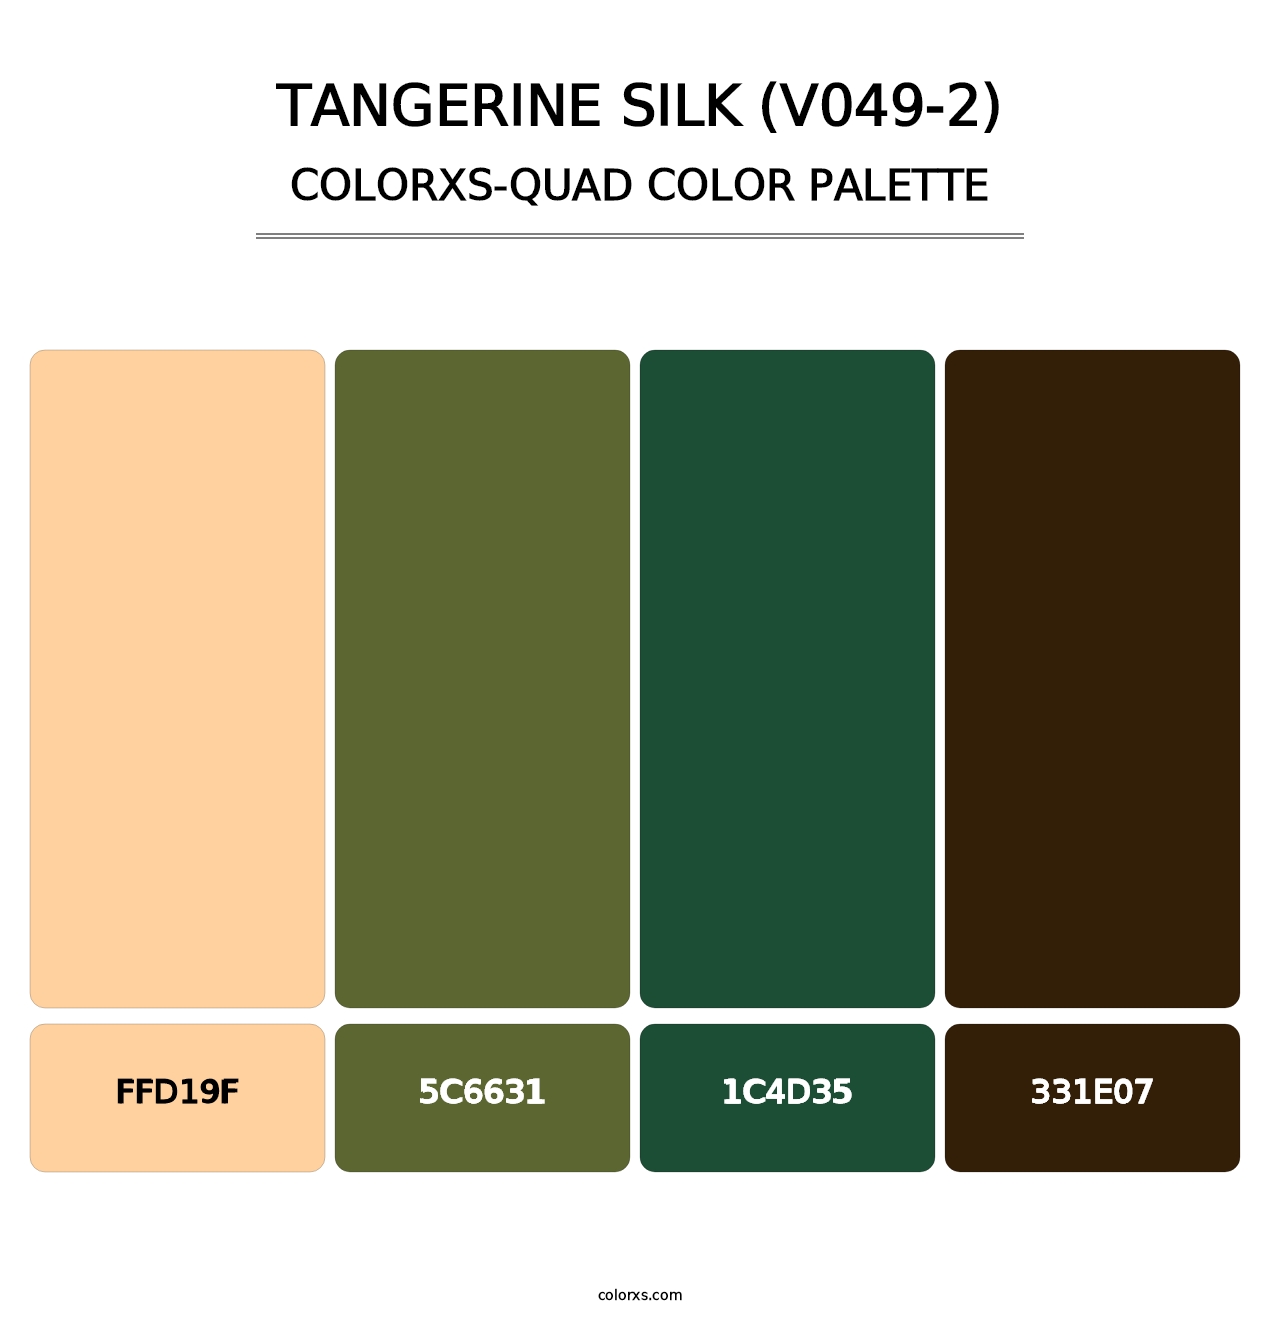 Tangerine Silk (V049-2) - Colorxs Quad Palette